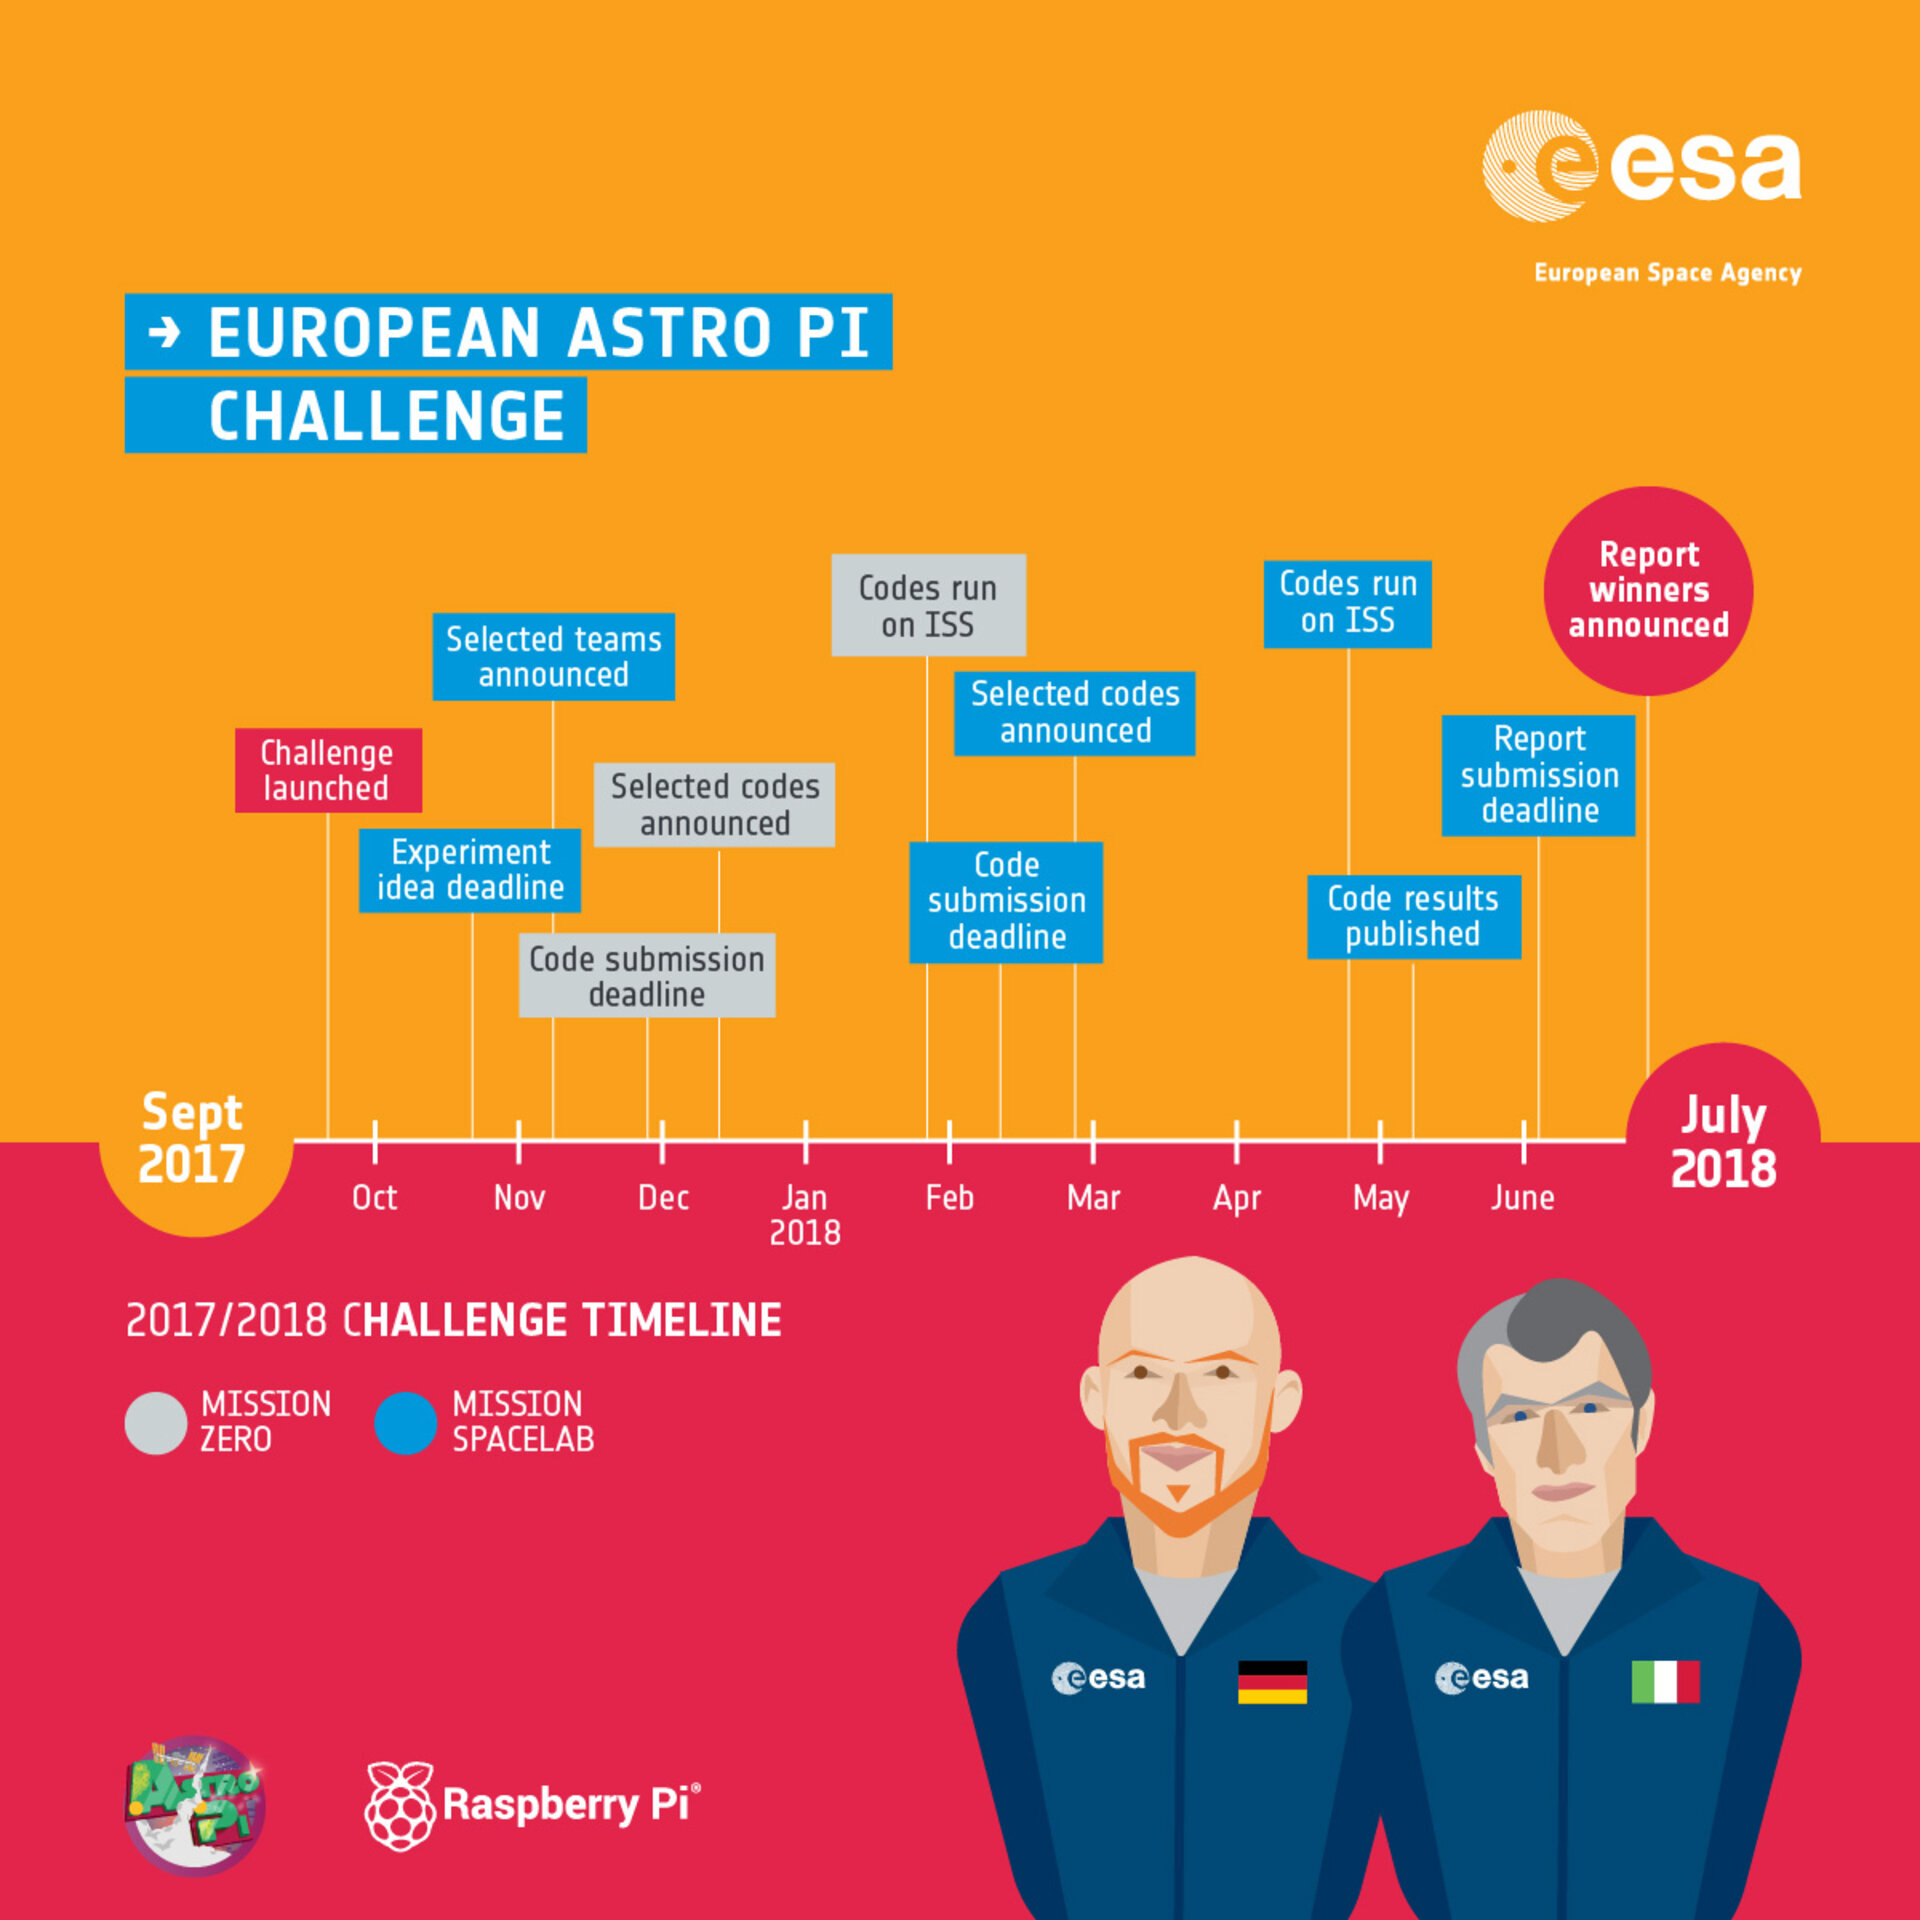 European Astro Pi Challenge 2017-2018 - Timeline